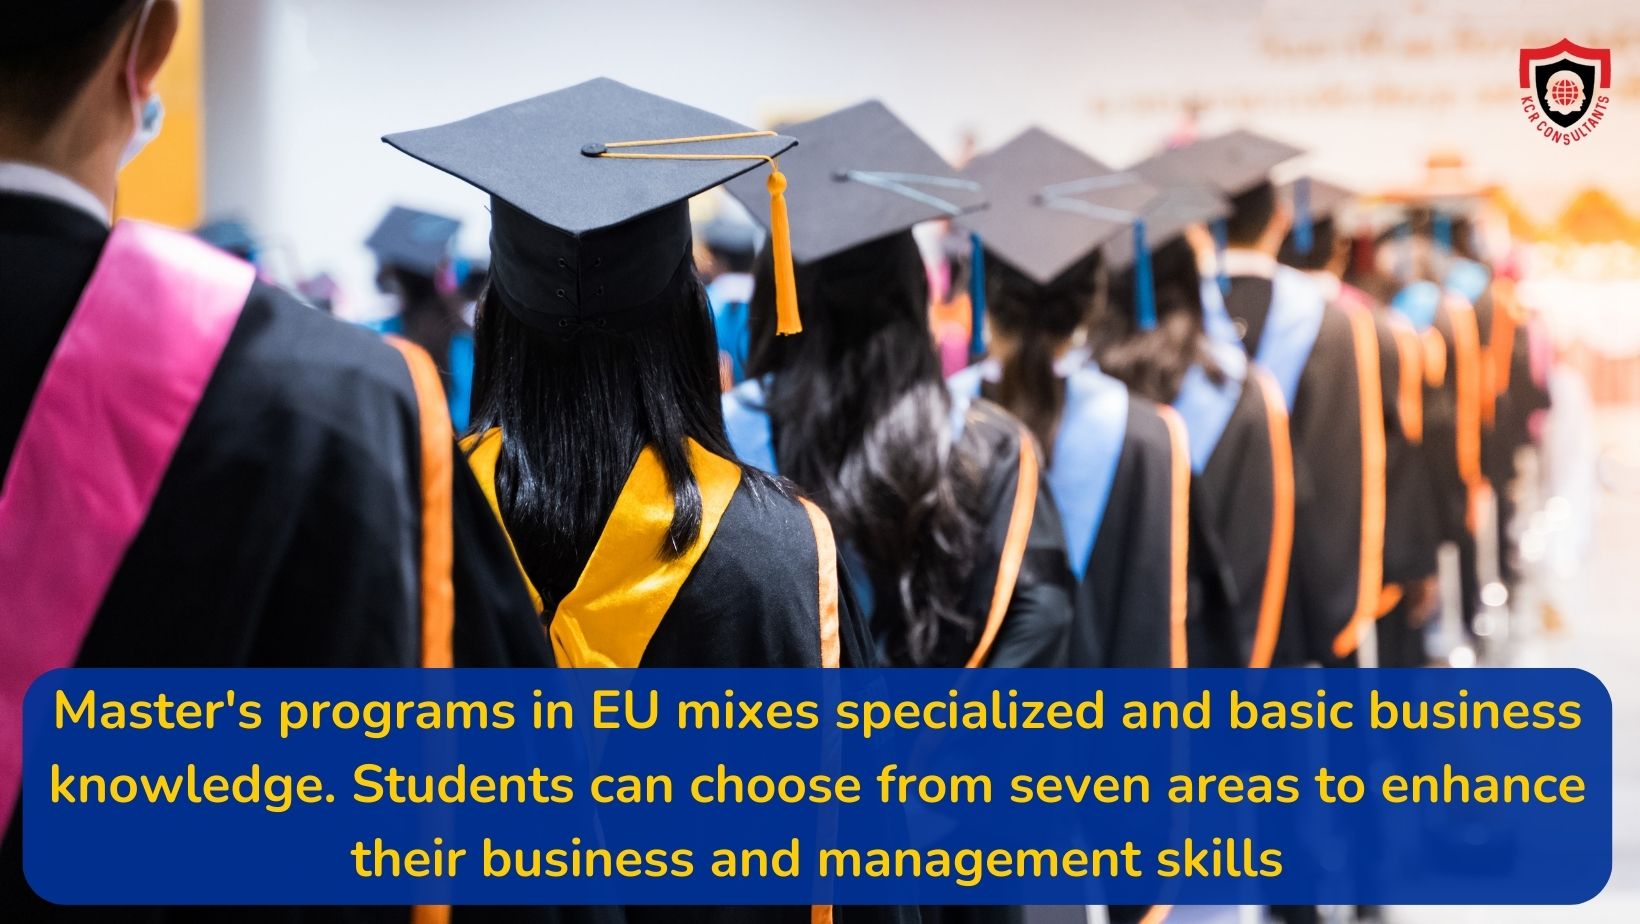 EU Business School - KCR CONSULTANTS - Master's Program